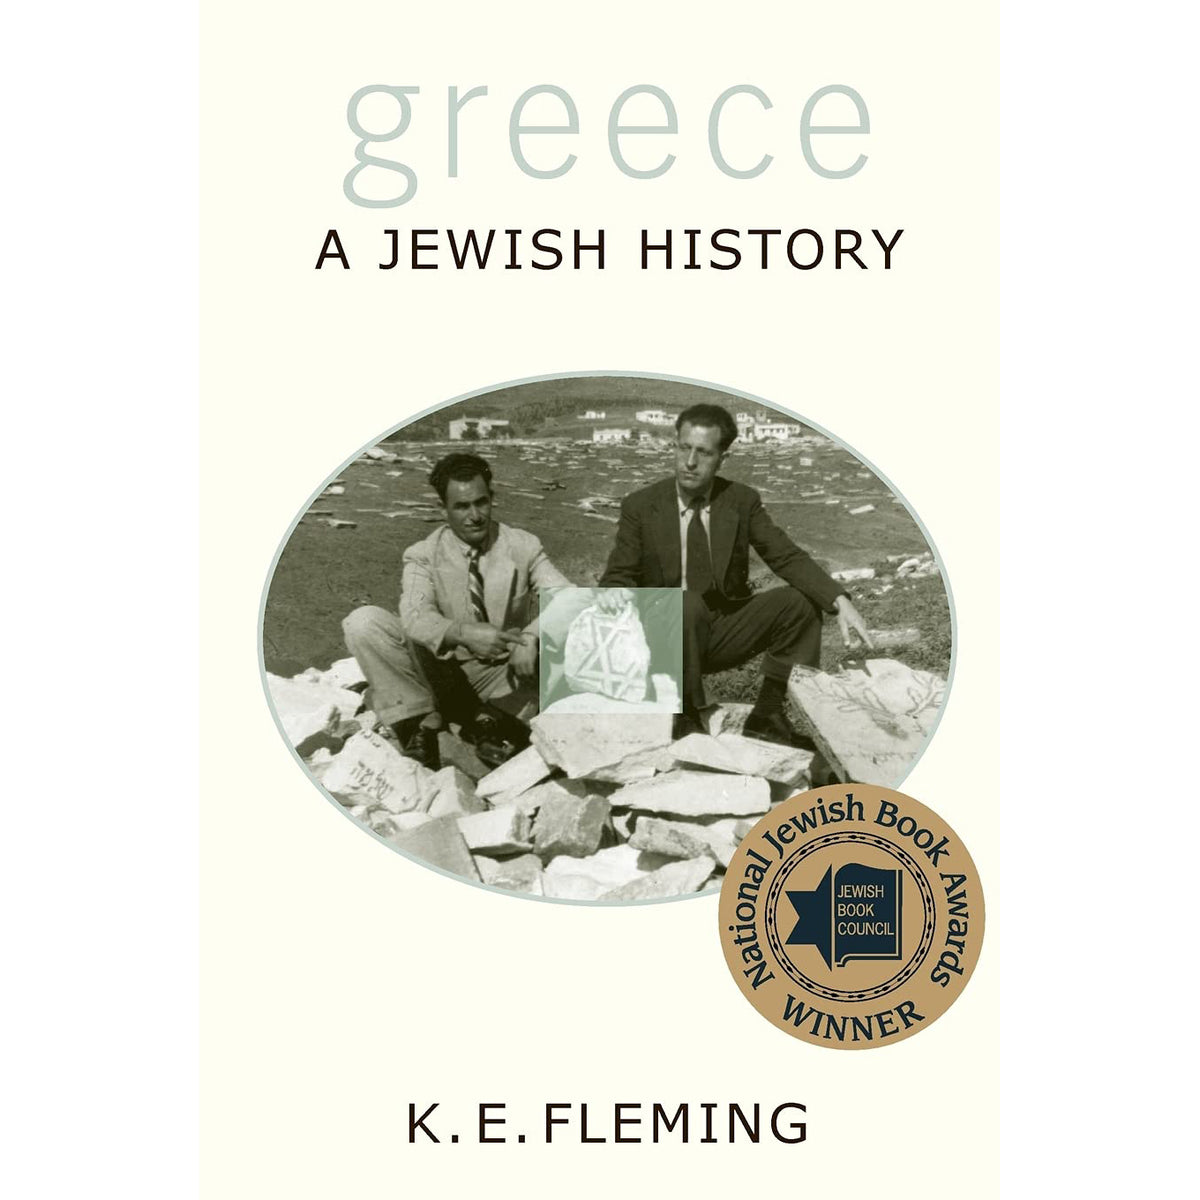 Greece — A Jewish History